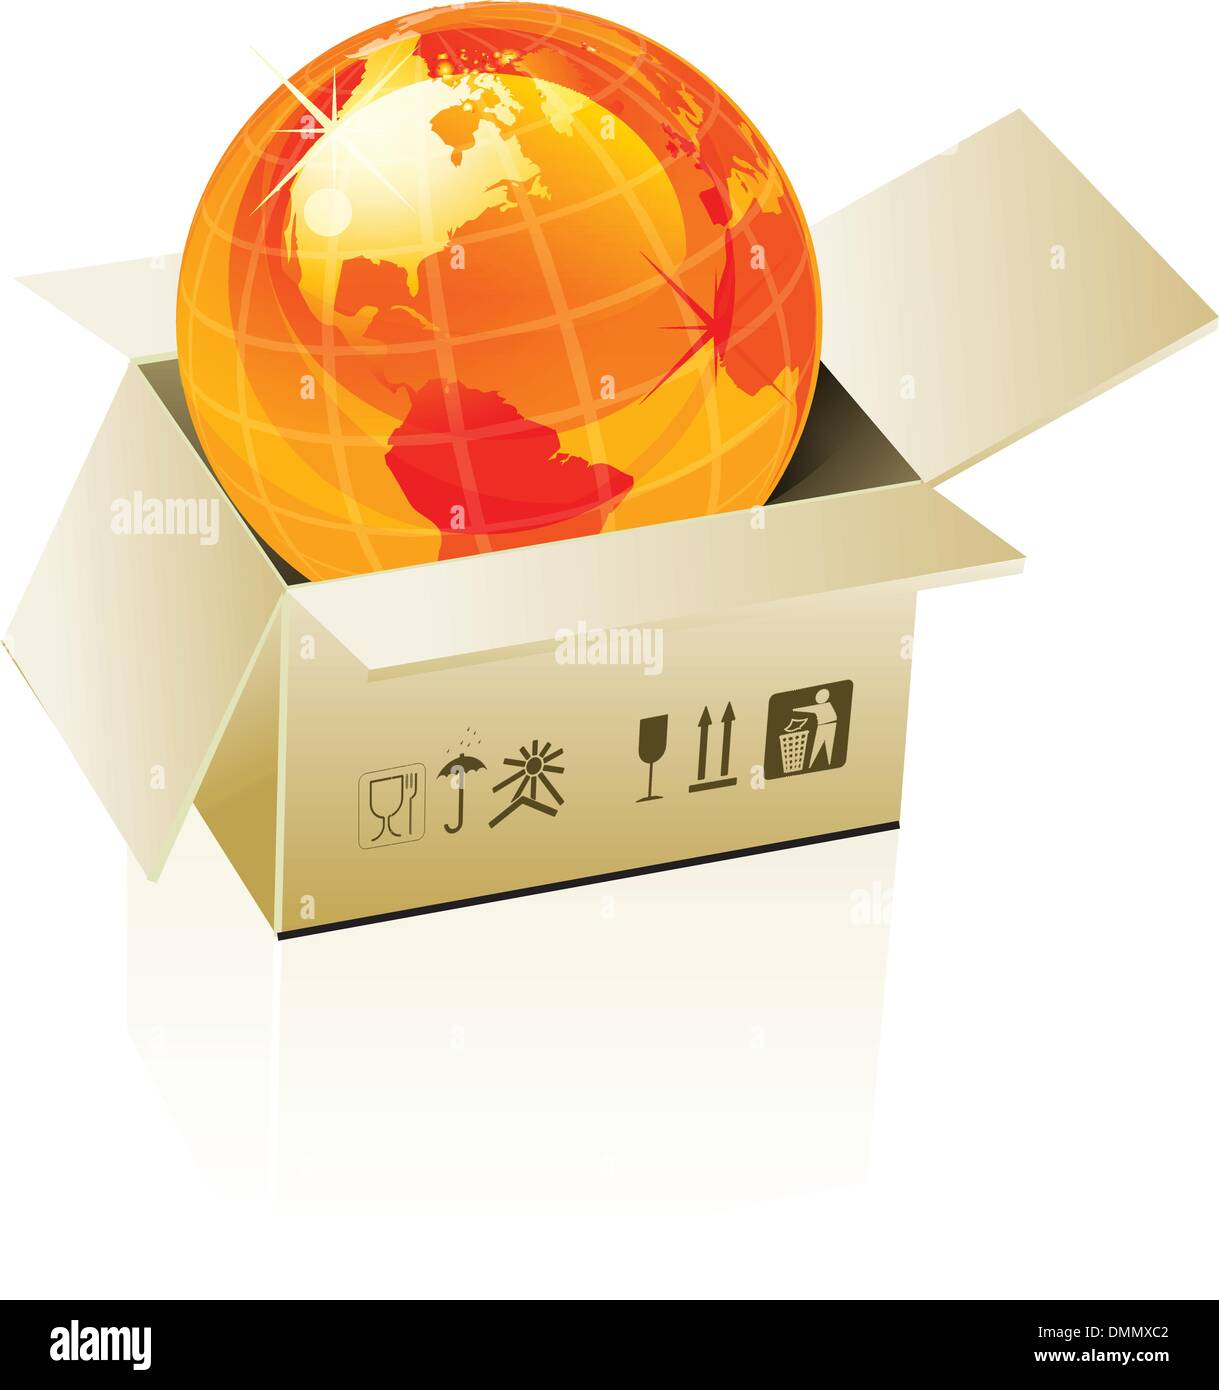 Earth globe in cardboard box Stock Vector